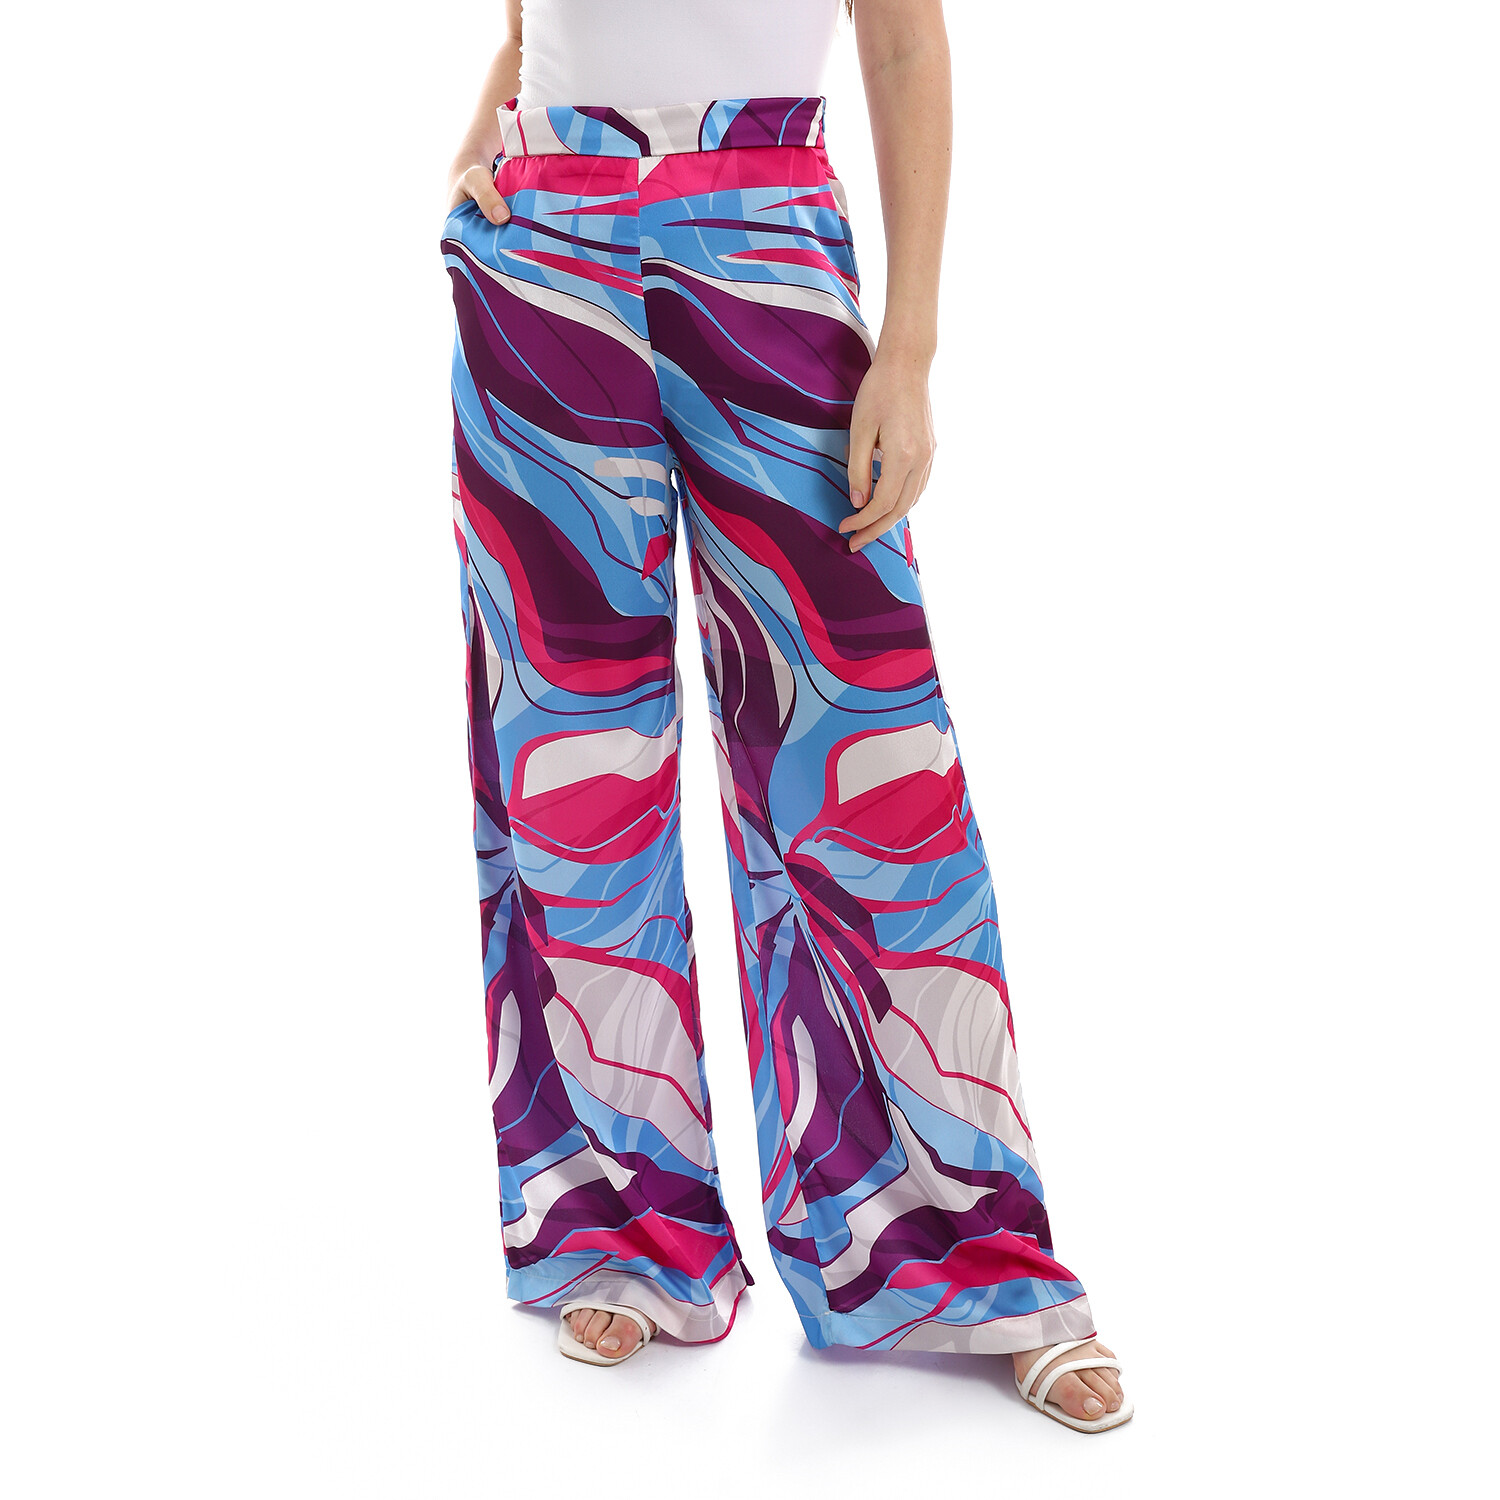 Self Patterned Silk Pants - Purple, Light Blue, Fuchsia & White 2960